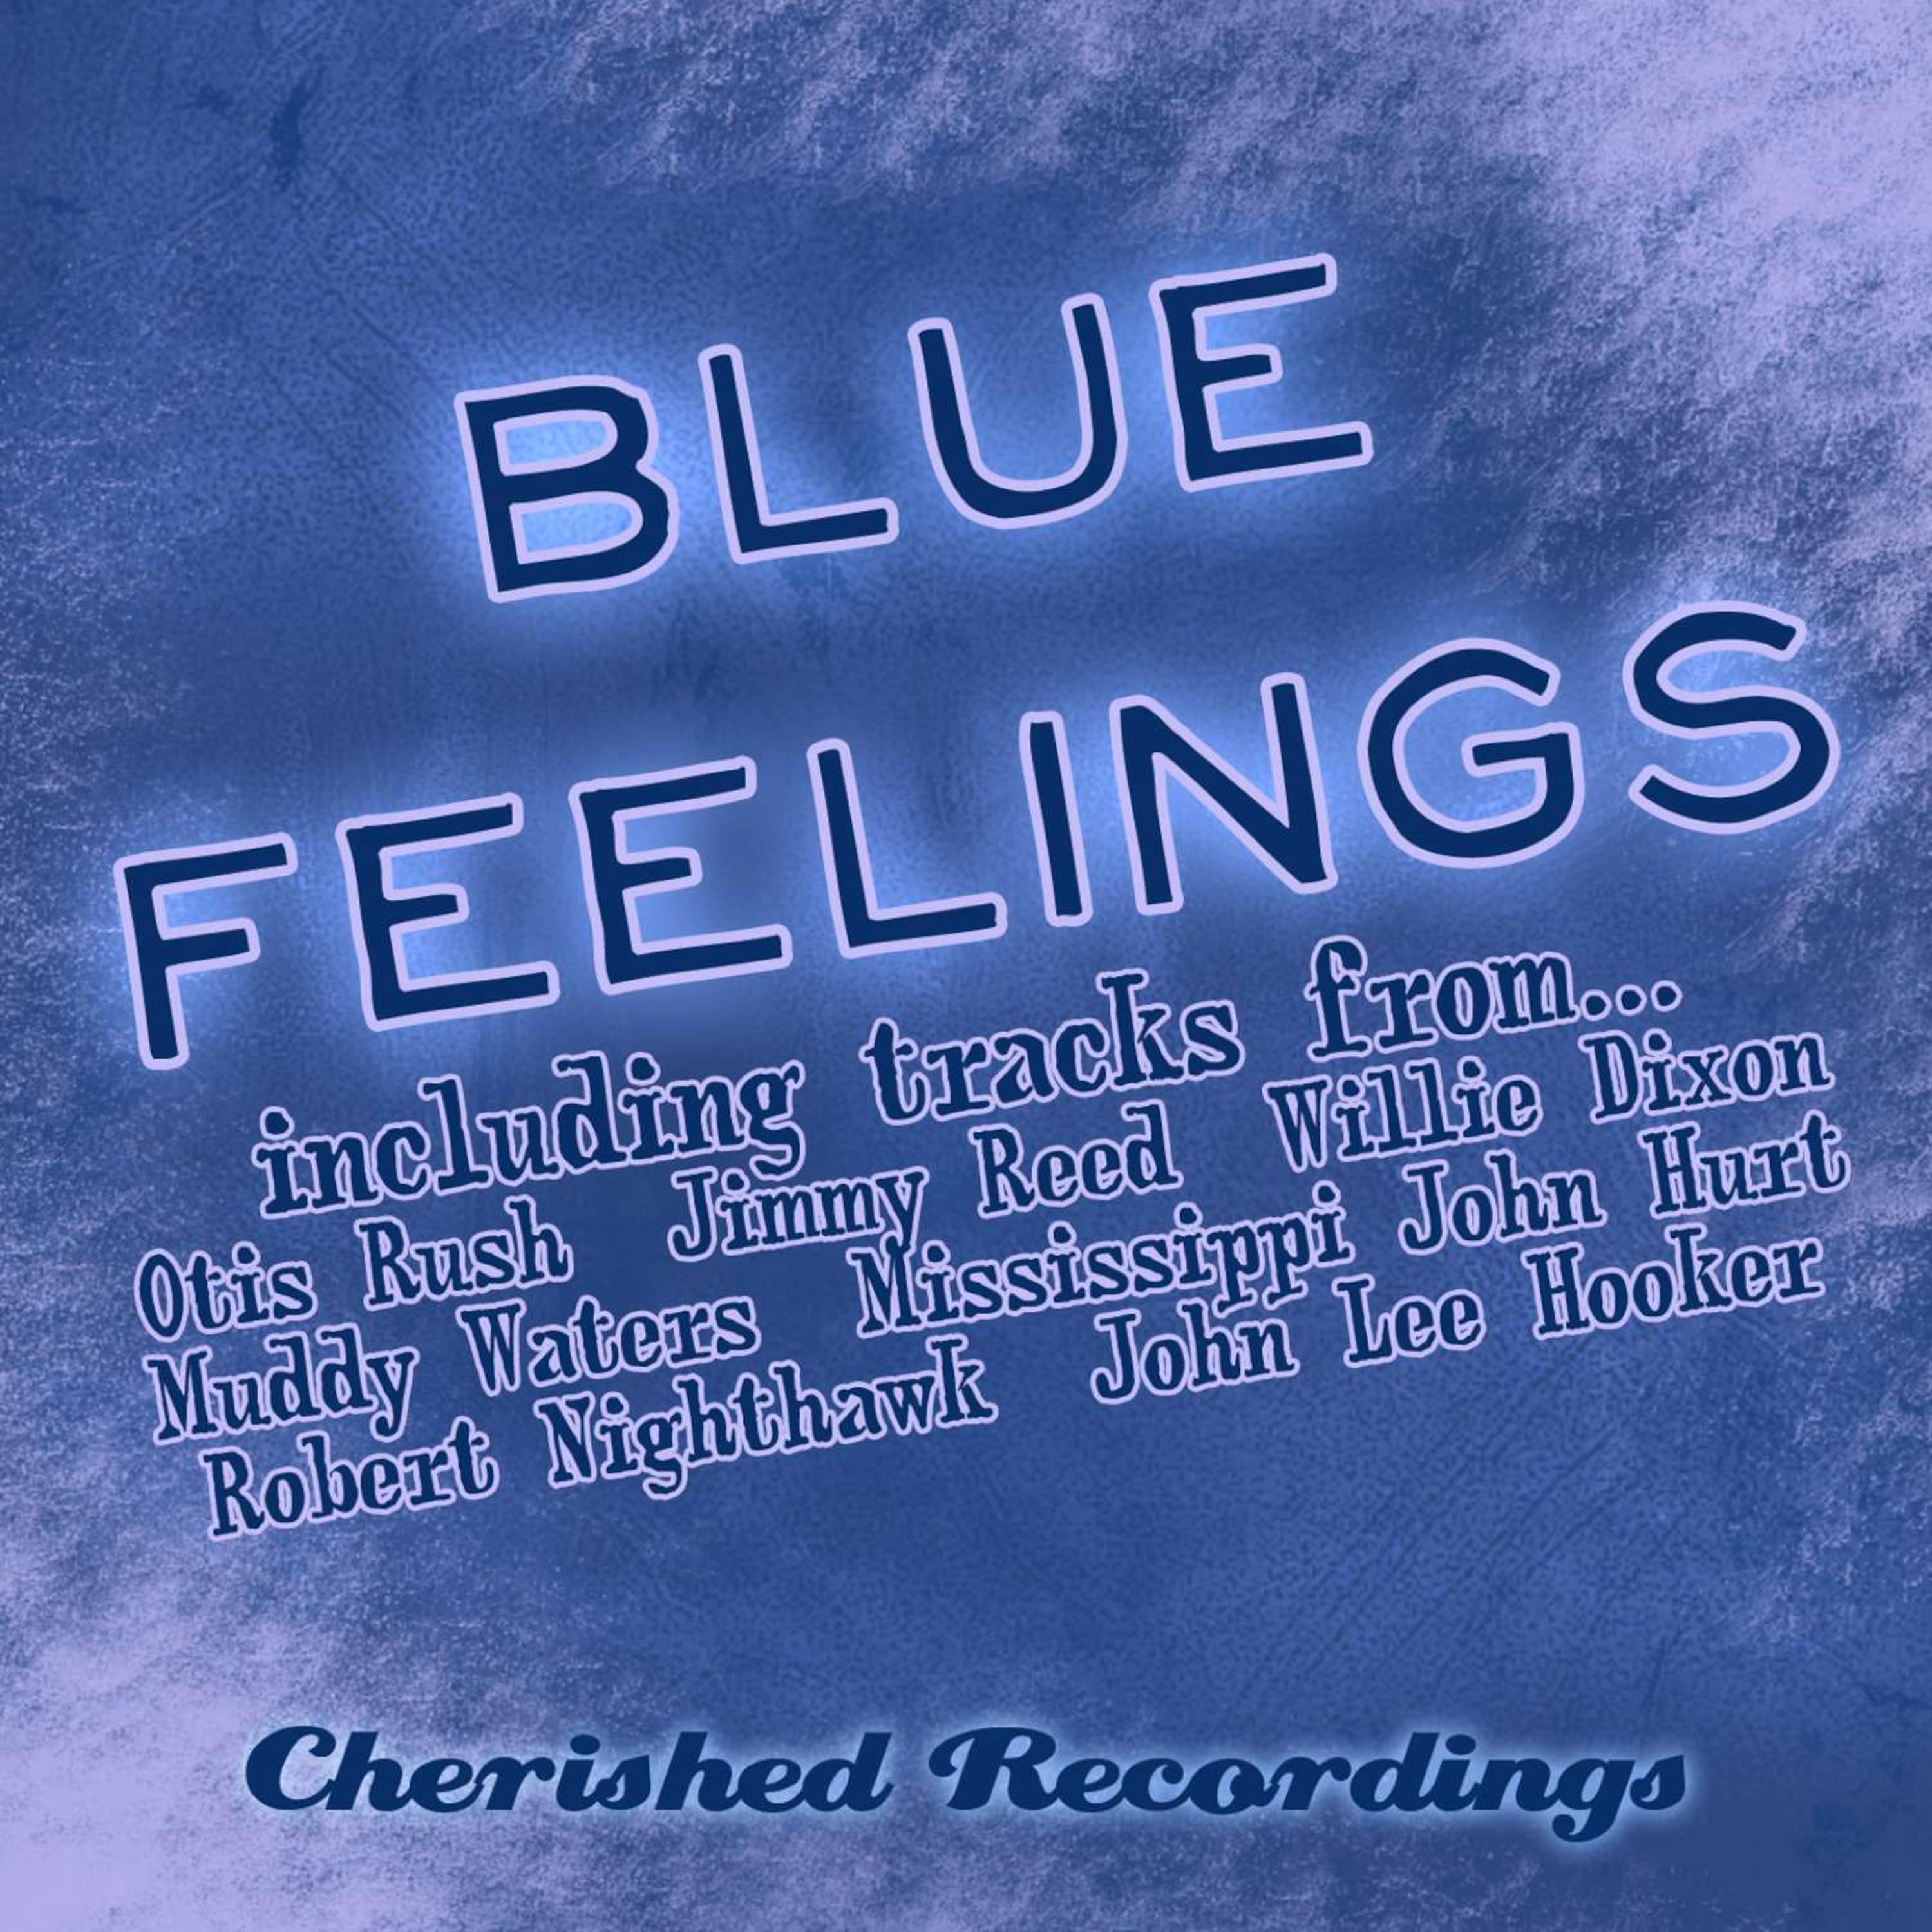 Feel Blue Song. Bleu feelings. Im feeling Blue. Baby Blue текст.